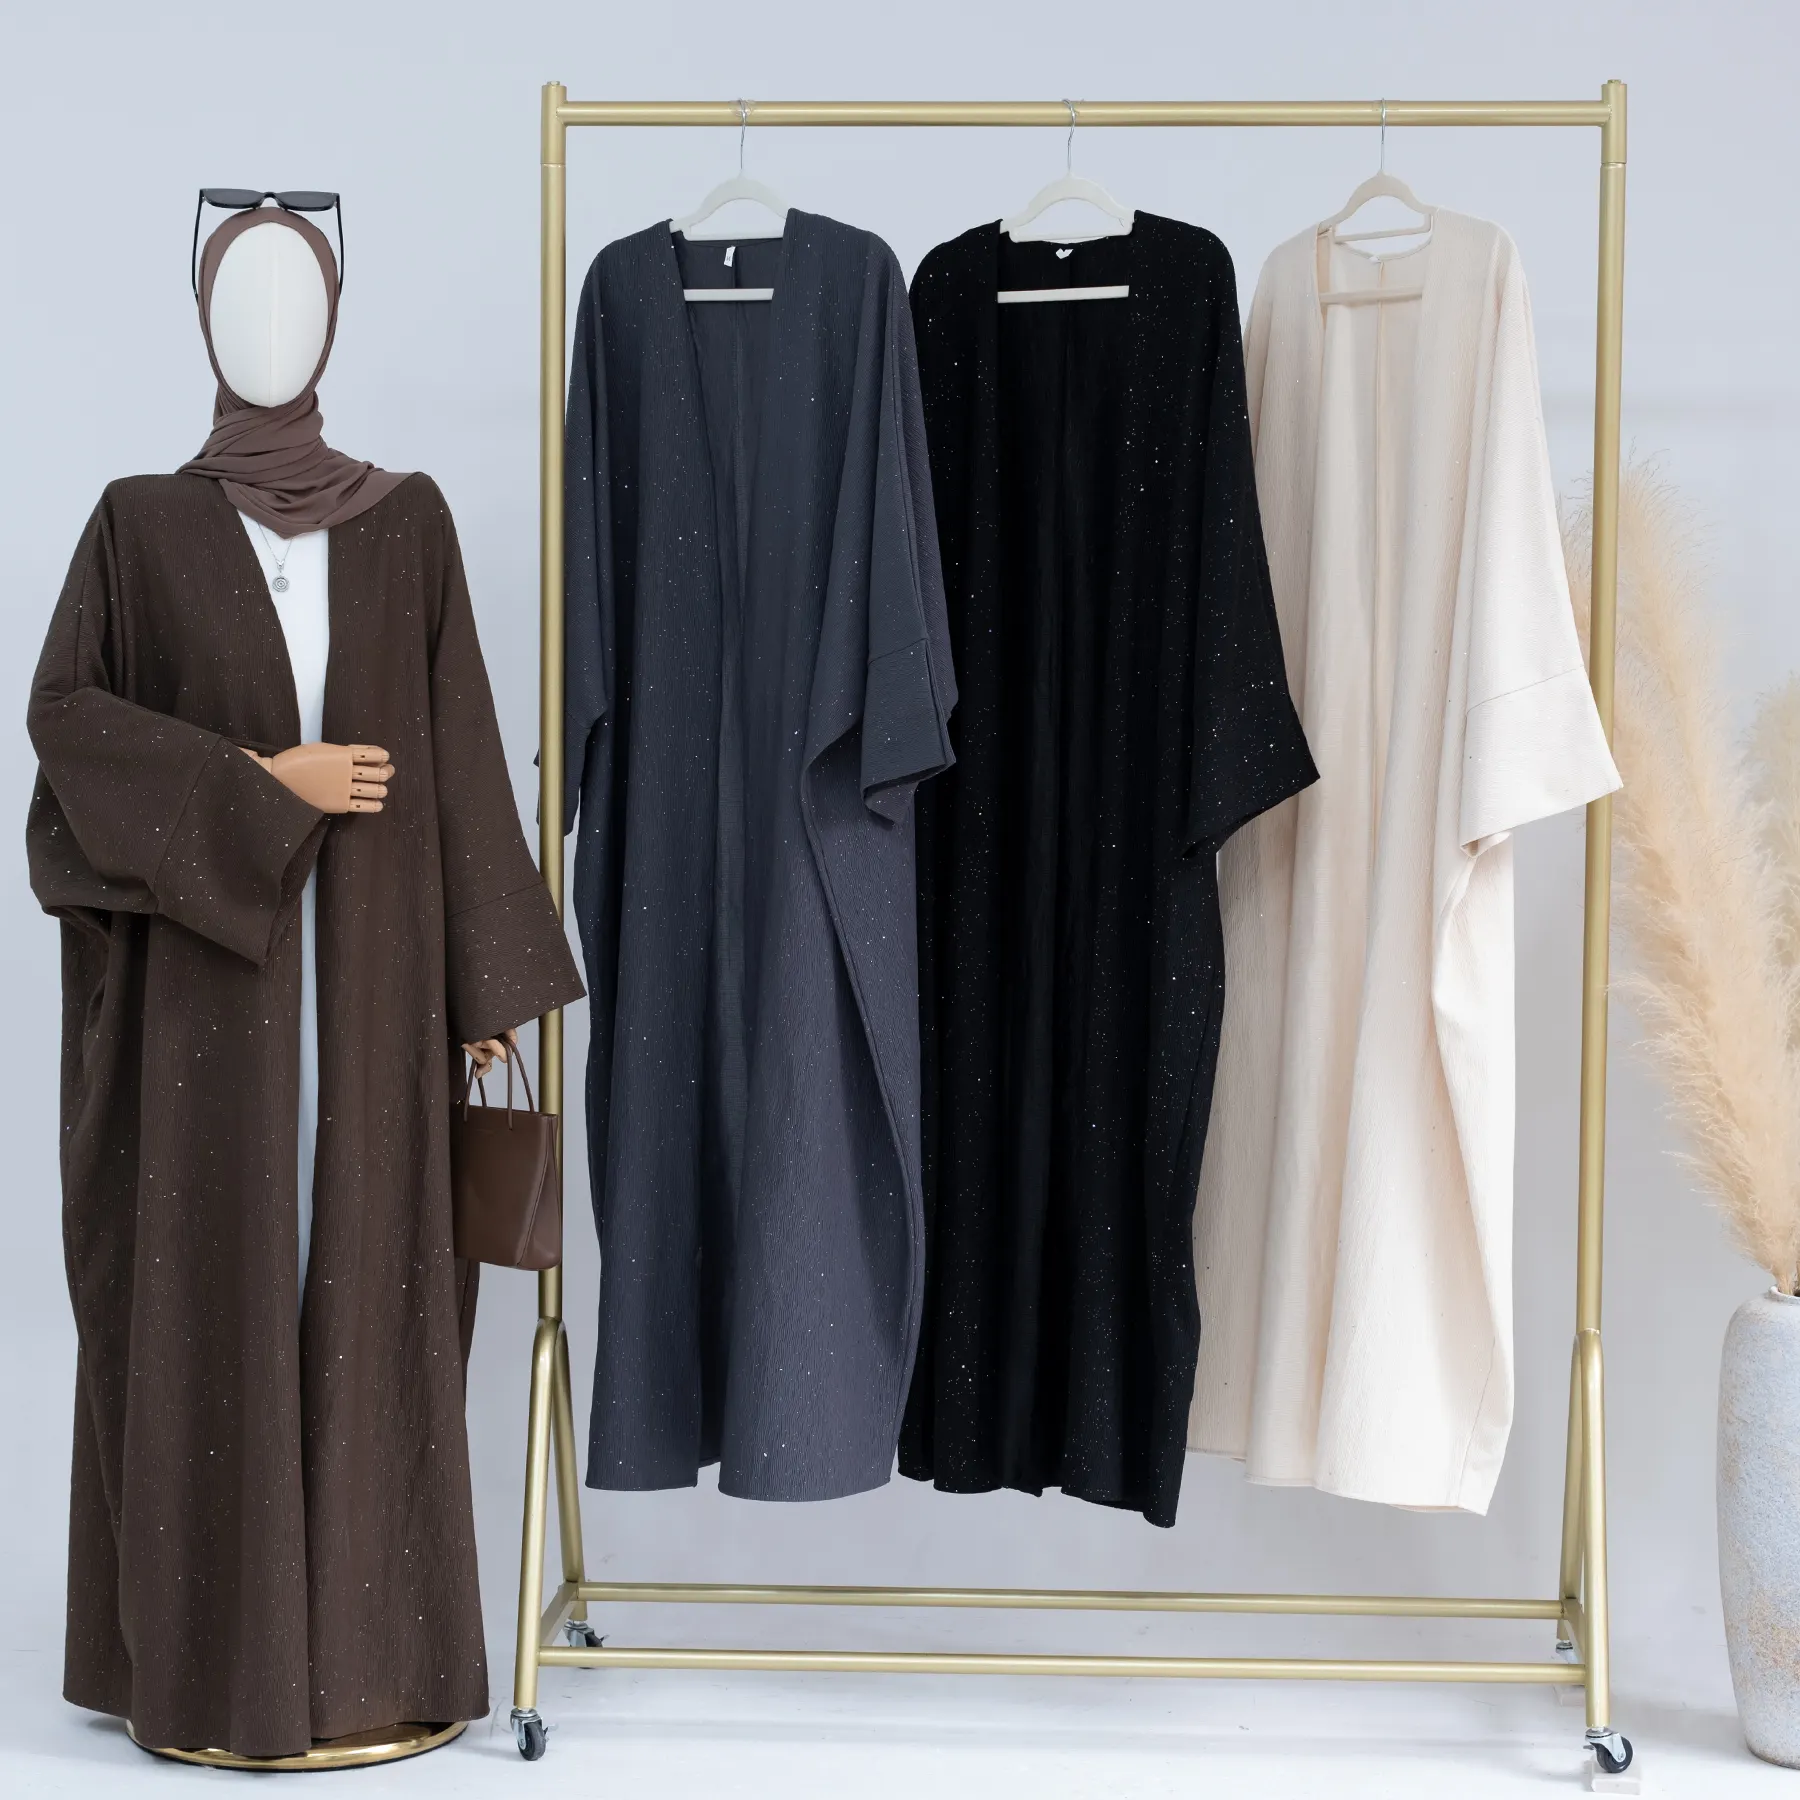 2023 Loriya nuevo Otoño Invierno Dubai Abaya diseños ropa islámica mujeres musulmanas Abaya cárdigan de poliéster grueso Abayas